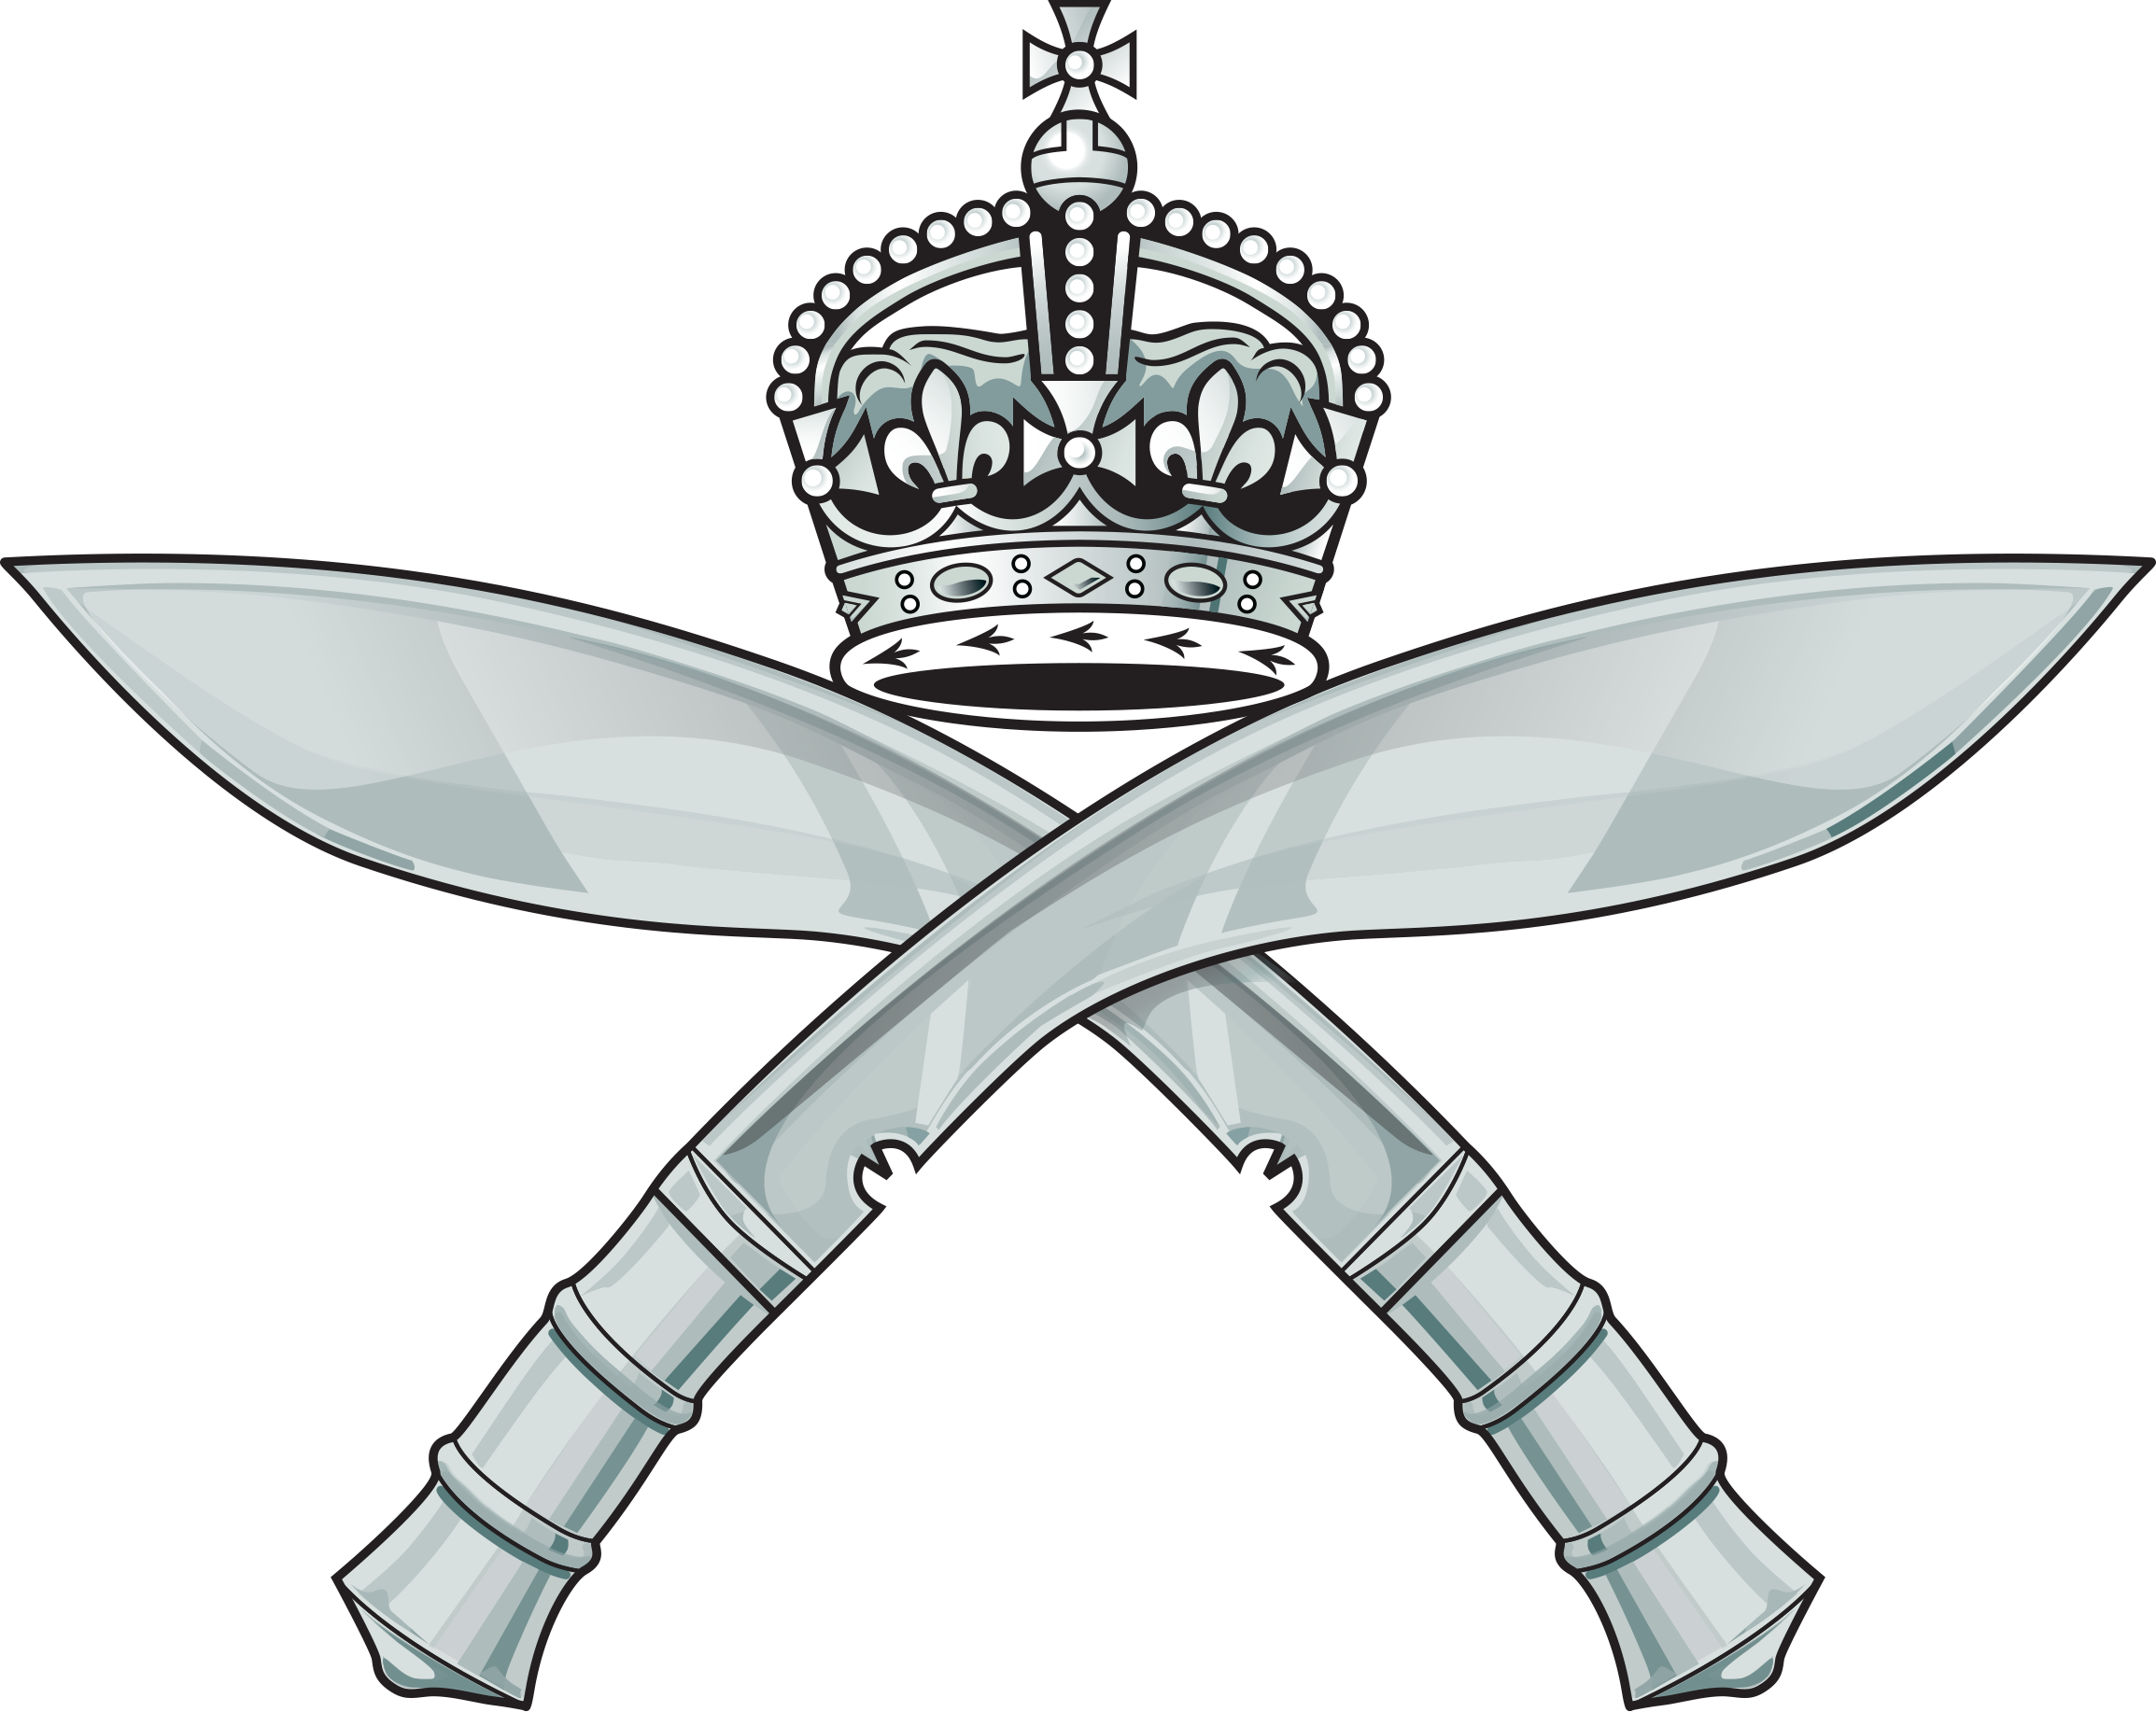 The Royal Gurkha Rifles (RGR) Regimental Awards 2023